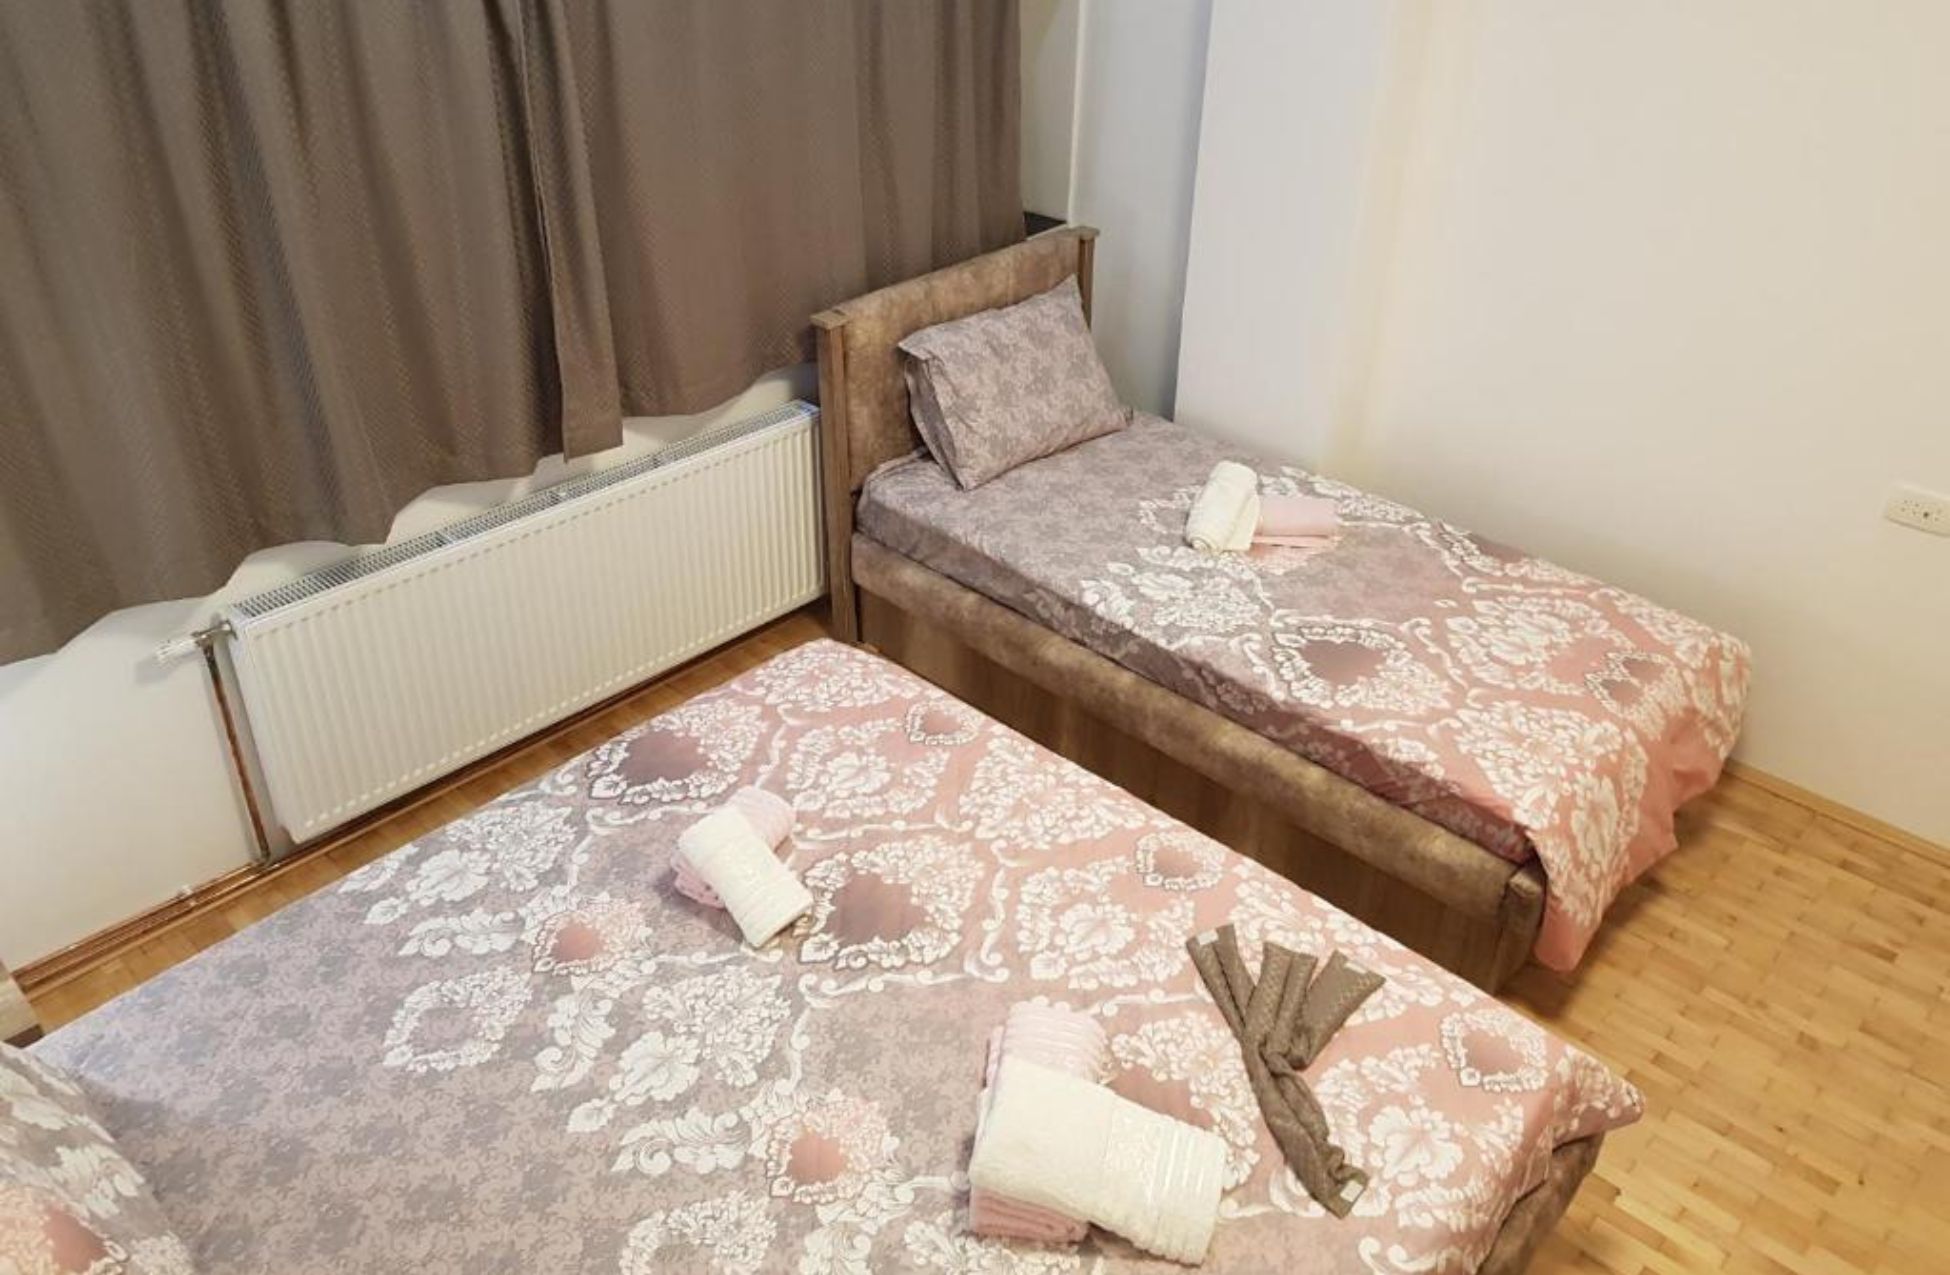 Prishtina Newborn ABC Room - Best Hotels In Pristina